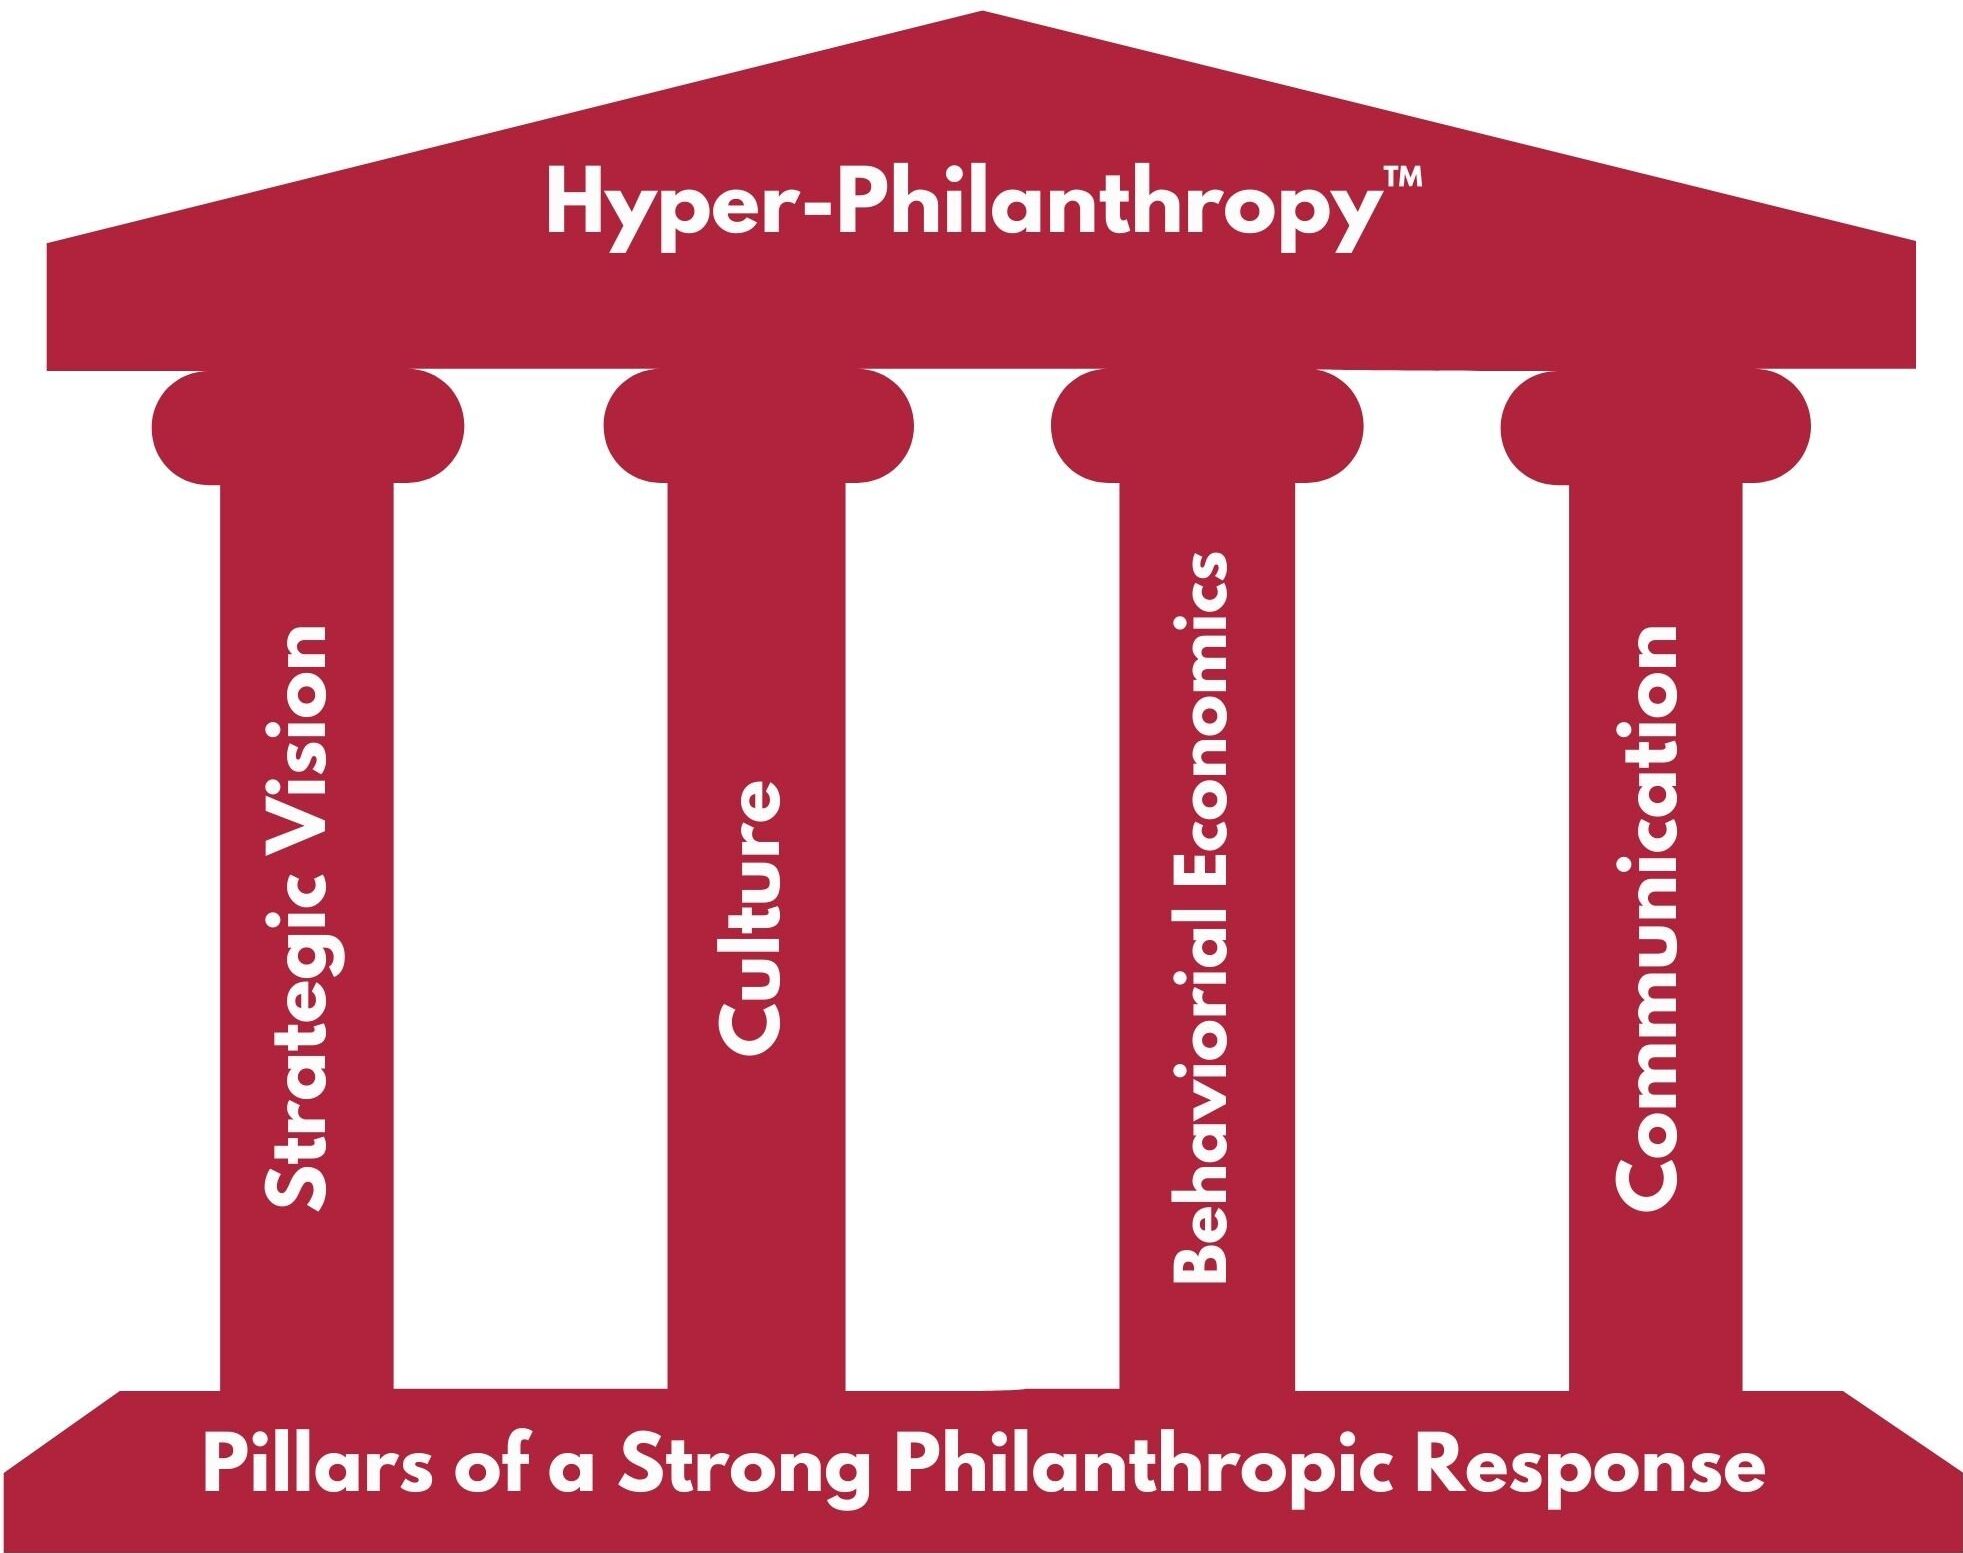 Hyper-Philanthropy™ in a Post-COVID World